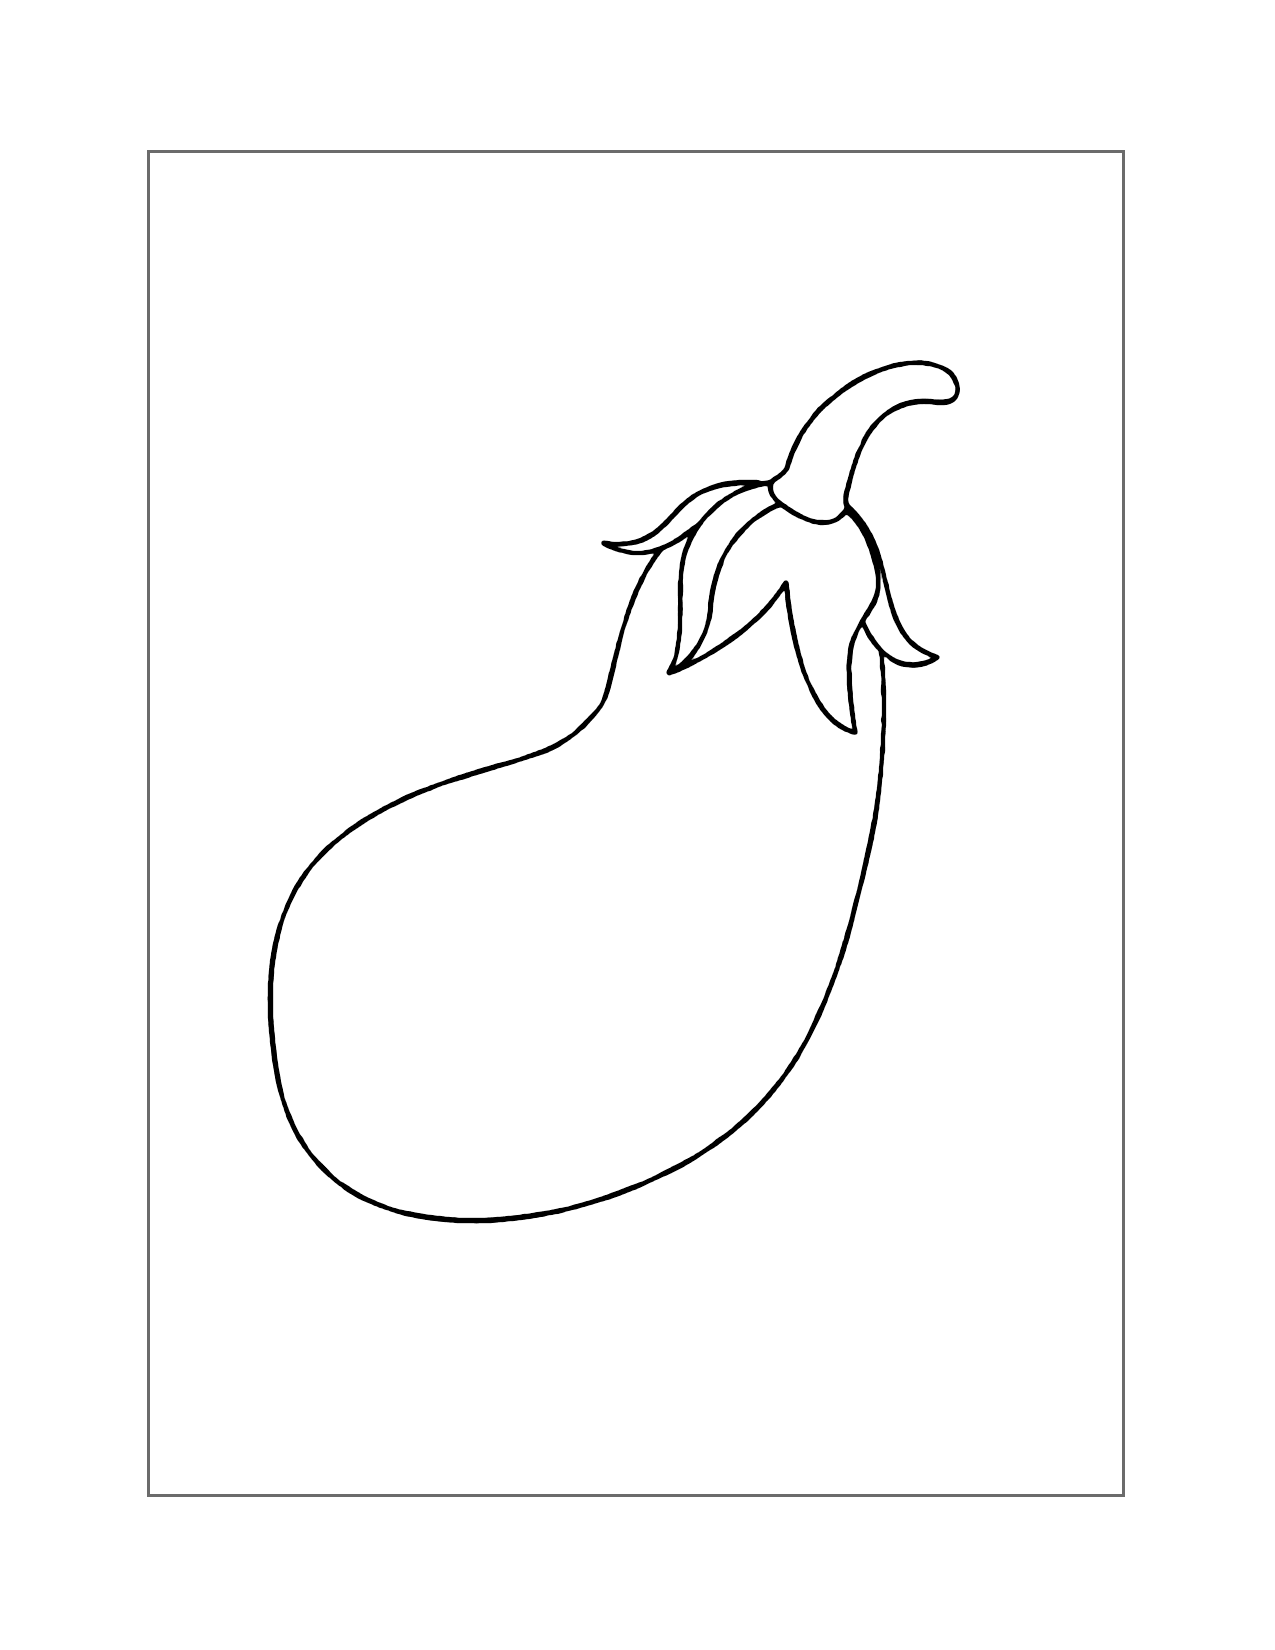 Eggplant Line Art Coloring Page